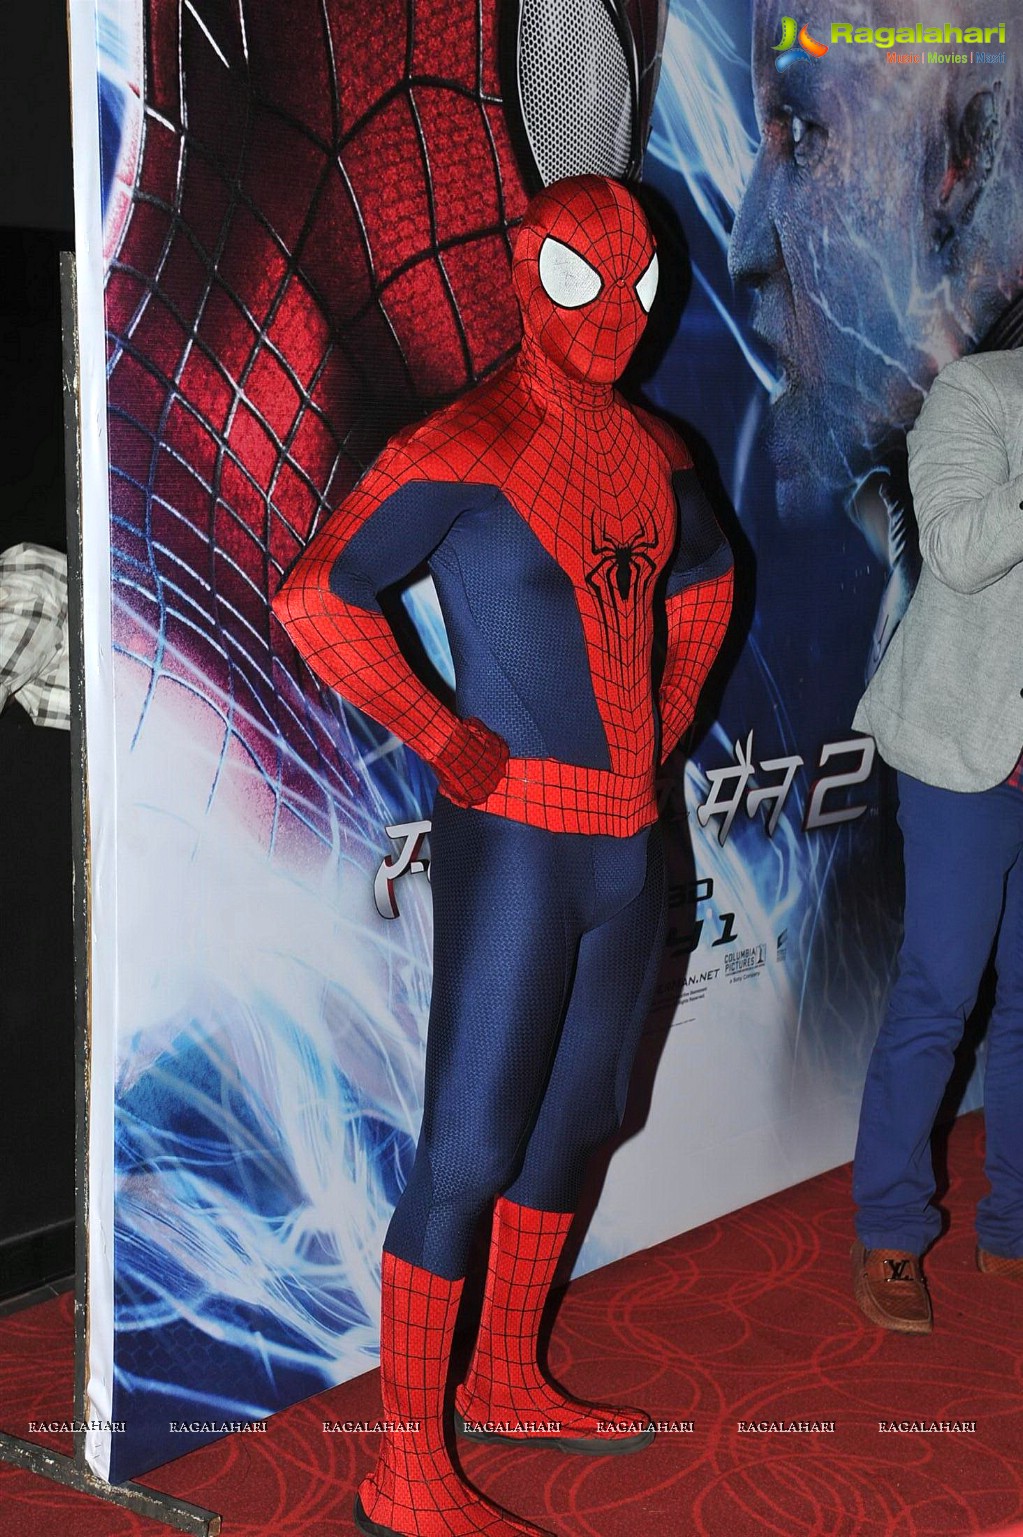 Vivek Oberoi Launches The Amazing Spider-Man 2 Hindi Trailer, Mumbai